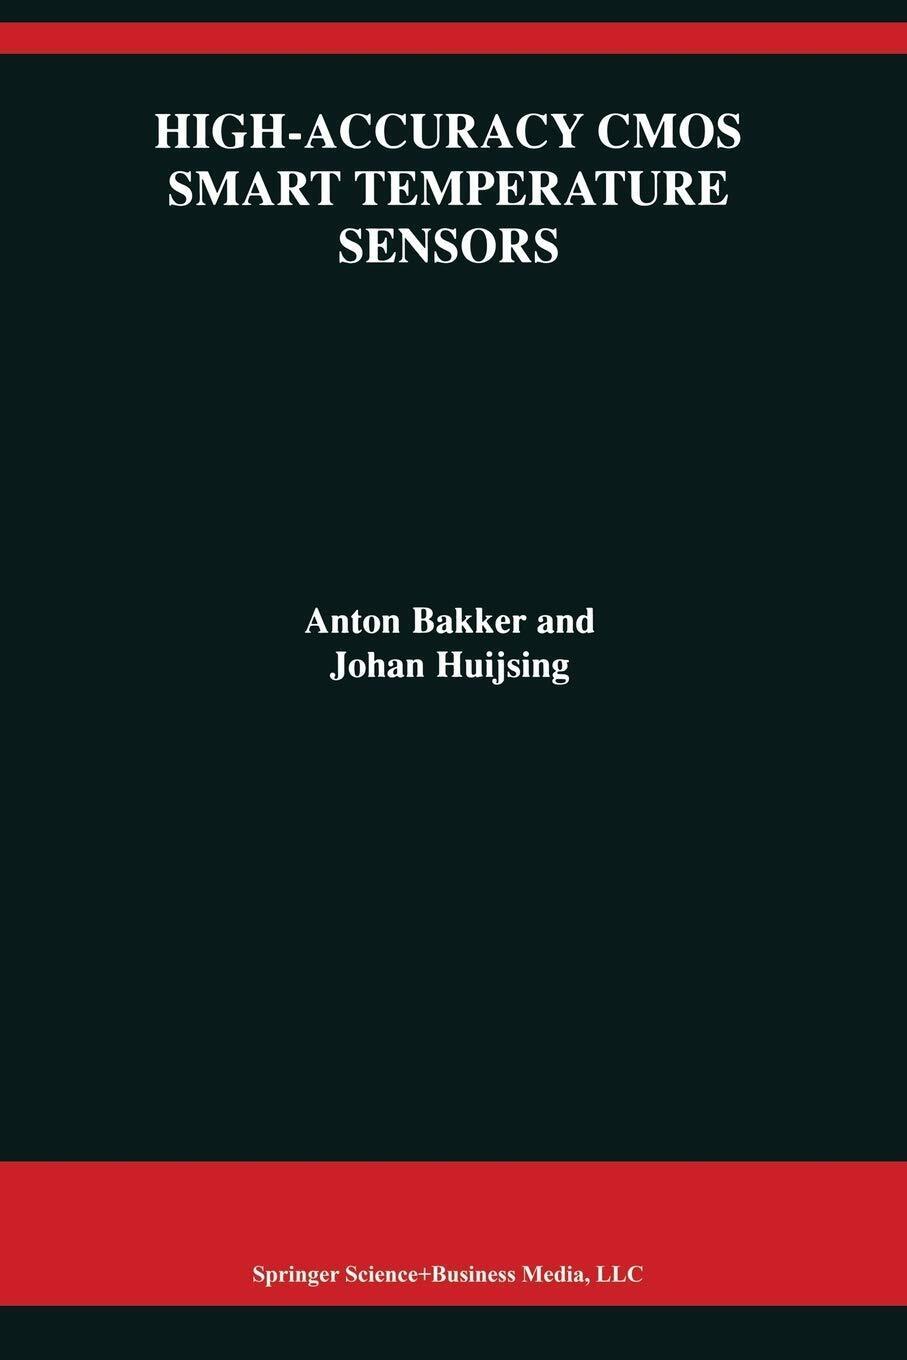 High-Accuracy CMOS Smart Temperature Sensors - Anton Bakker - Springer, 2010